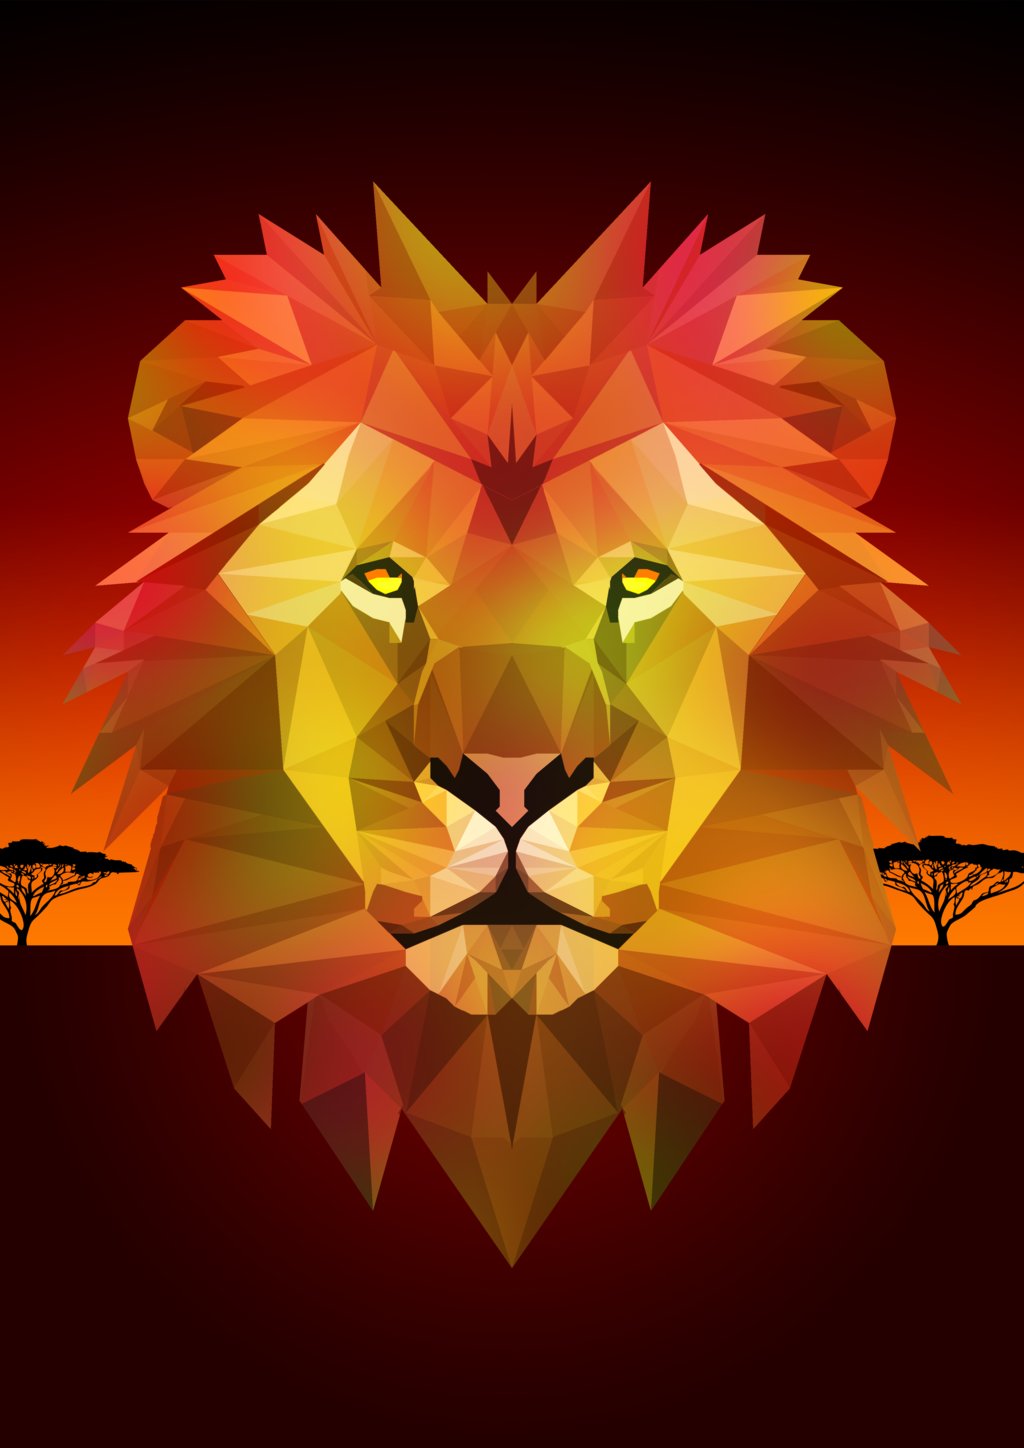 Most recent image: Geometric Lion